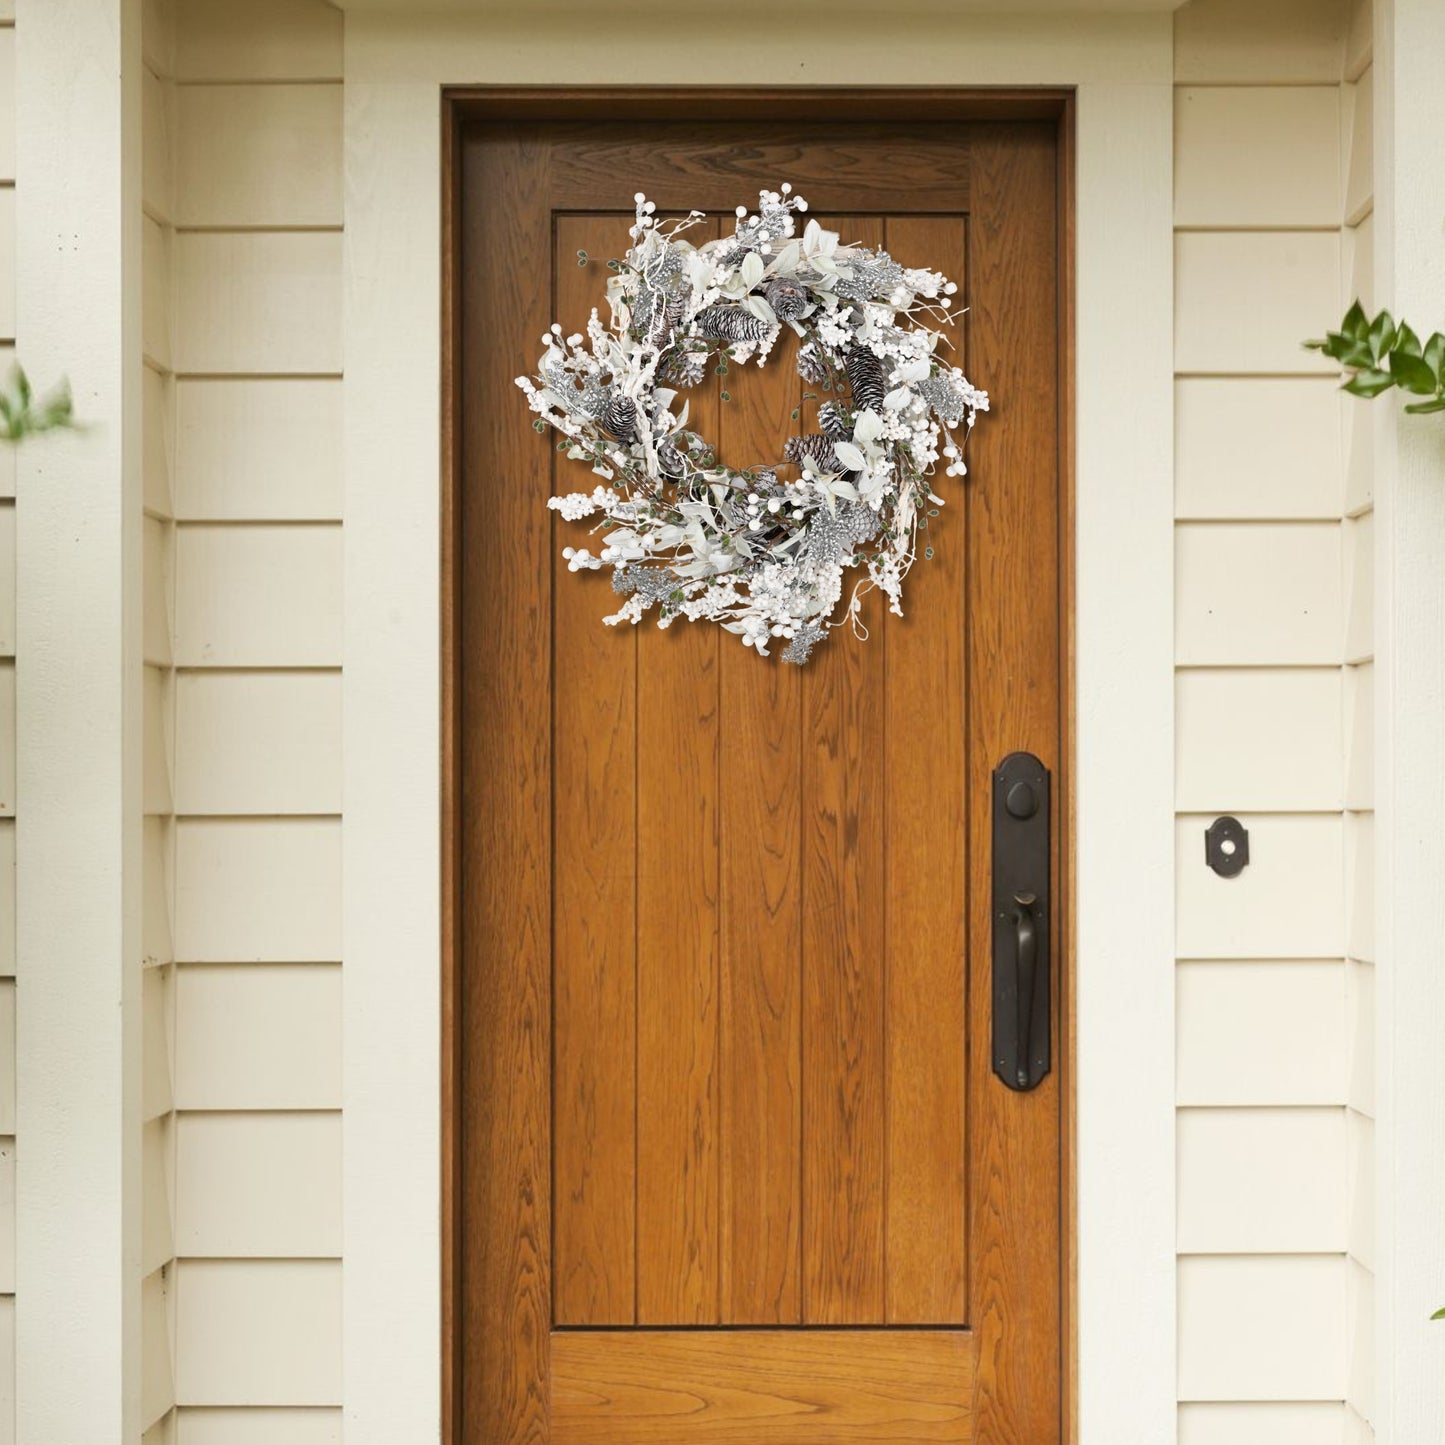 24 inch White Christmas Wreath,Winter Wreaths for Front Door with Pinecones Berries